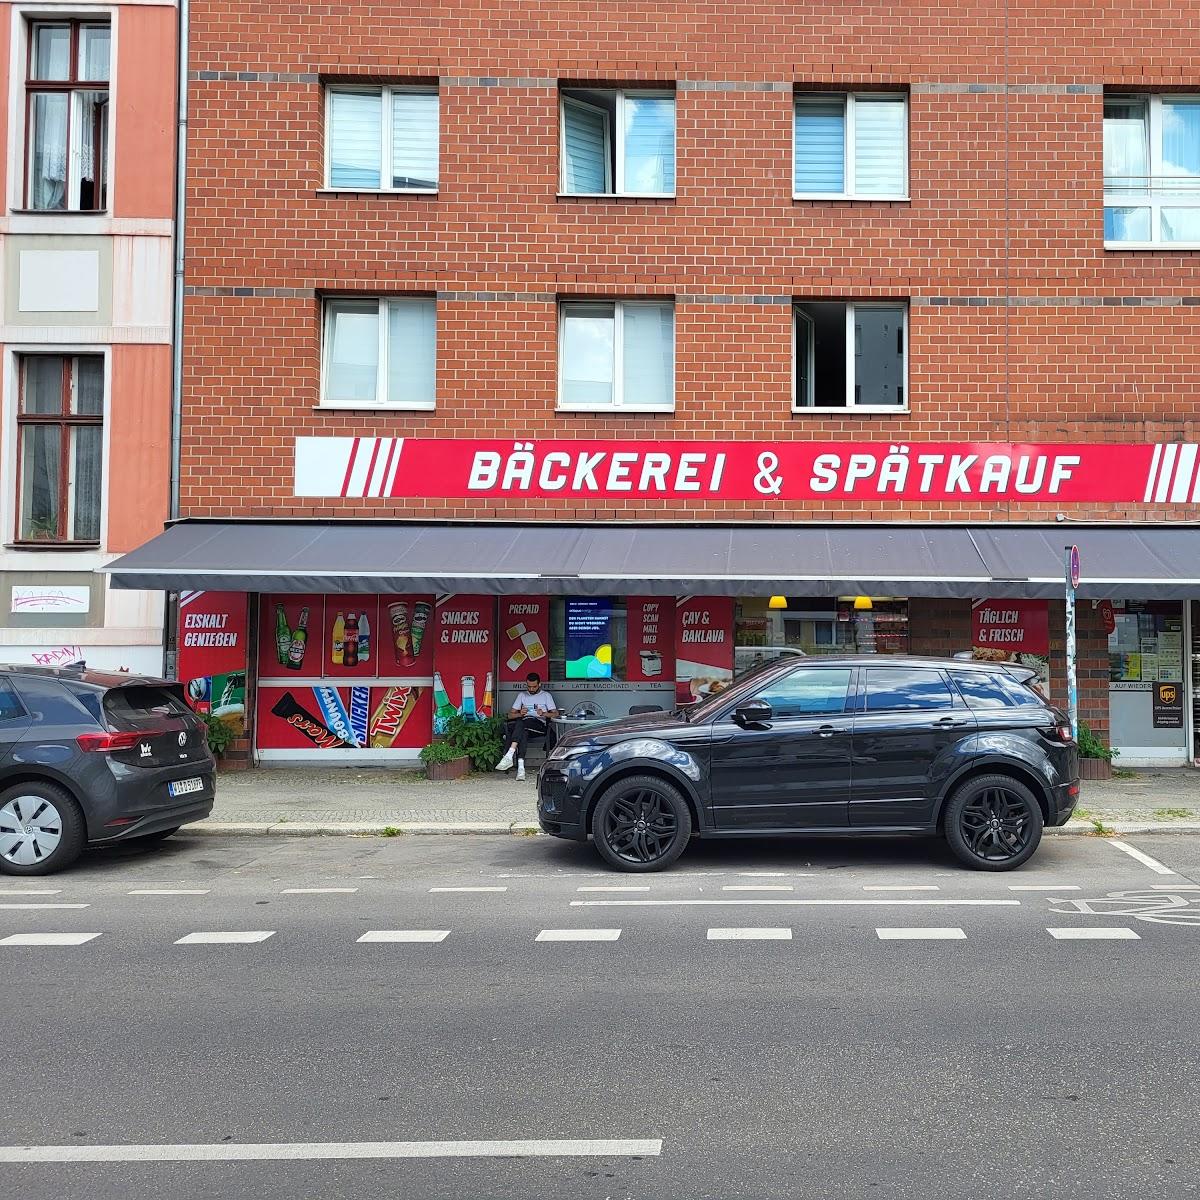 Restaurant "Bäckerei & Spätkauf" in Berlin